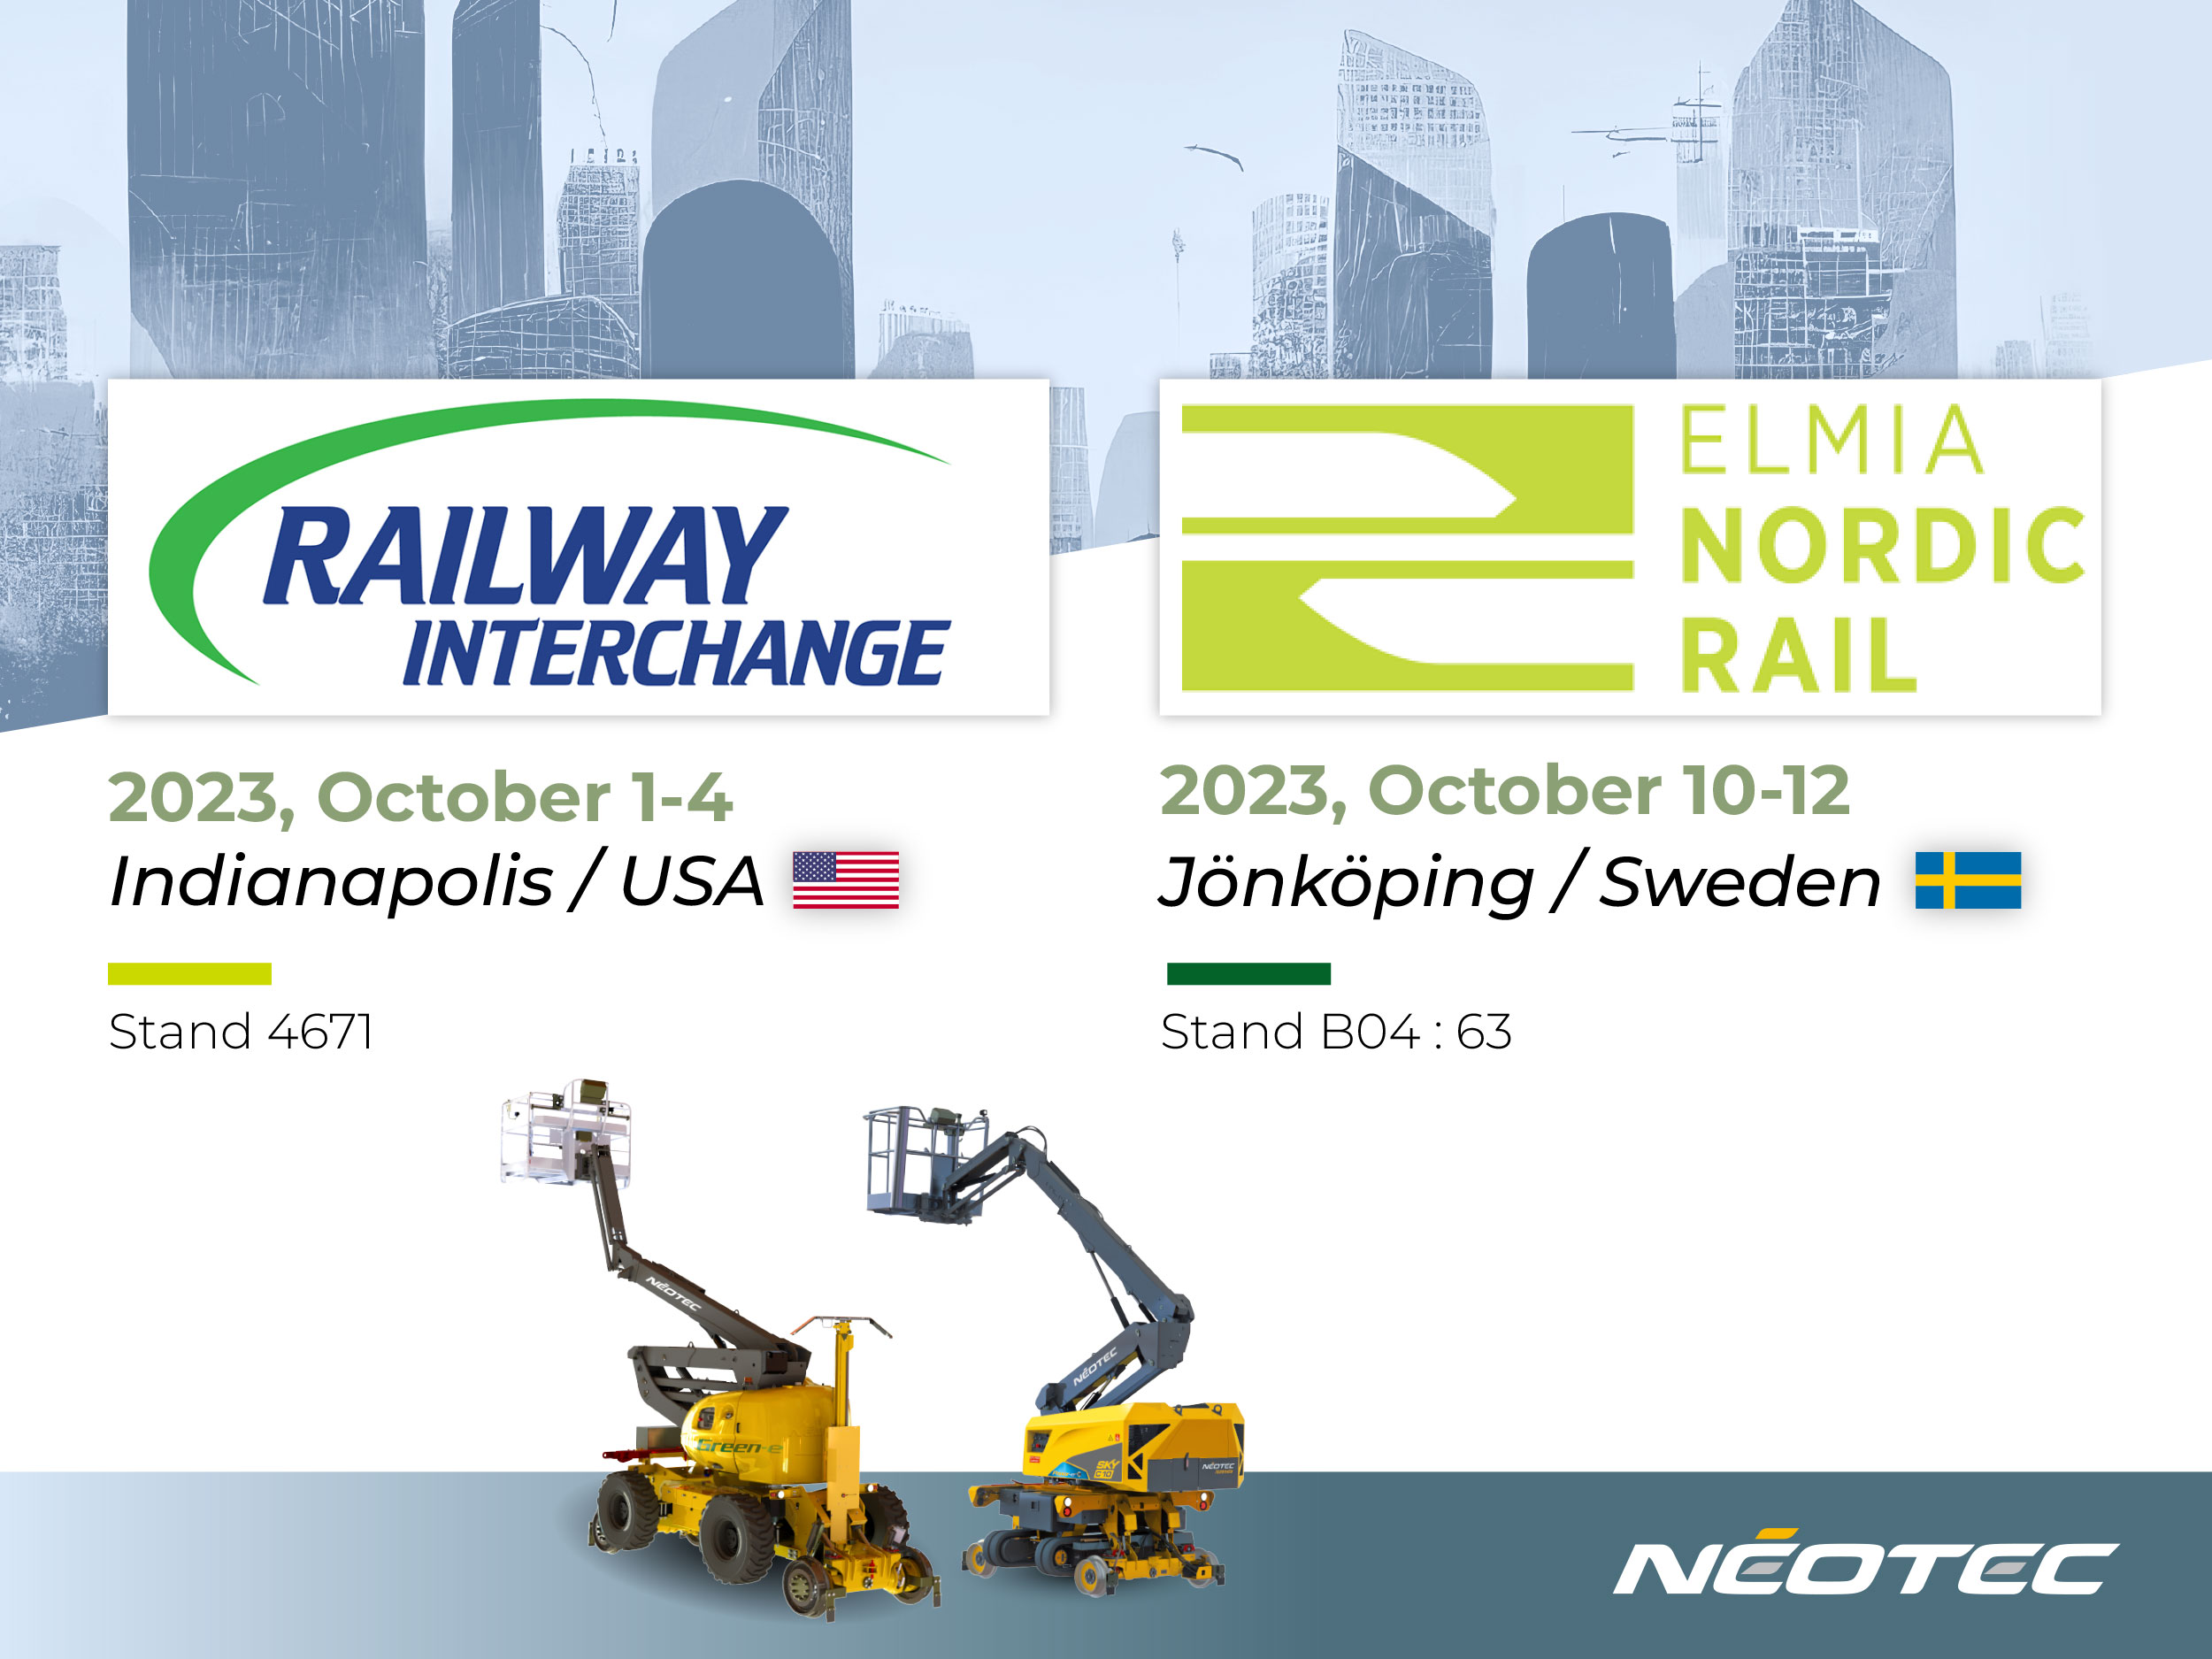 Next October, come and visit NEOTEC at RAILWAY INTERCHANGE & ELMIA NORDIC RAIL 2023